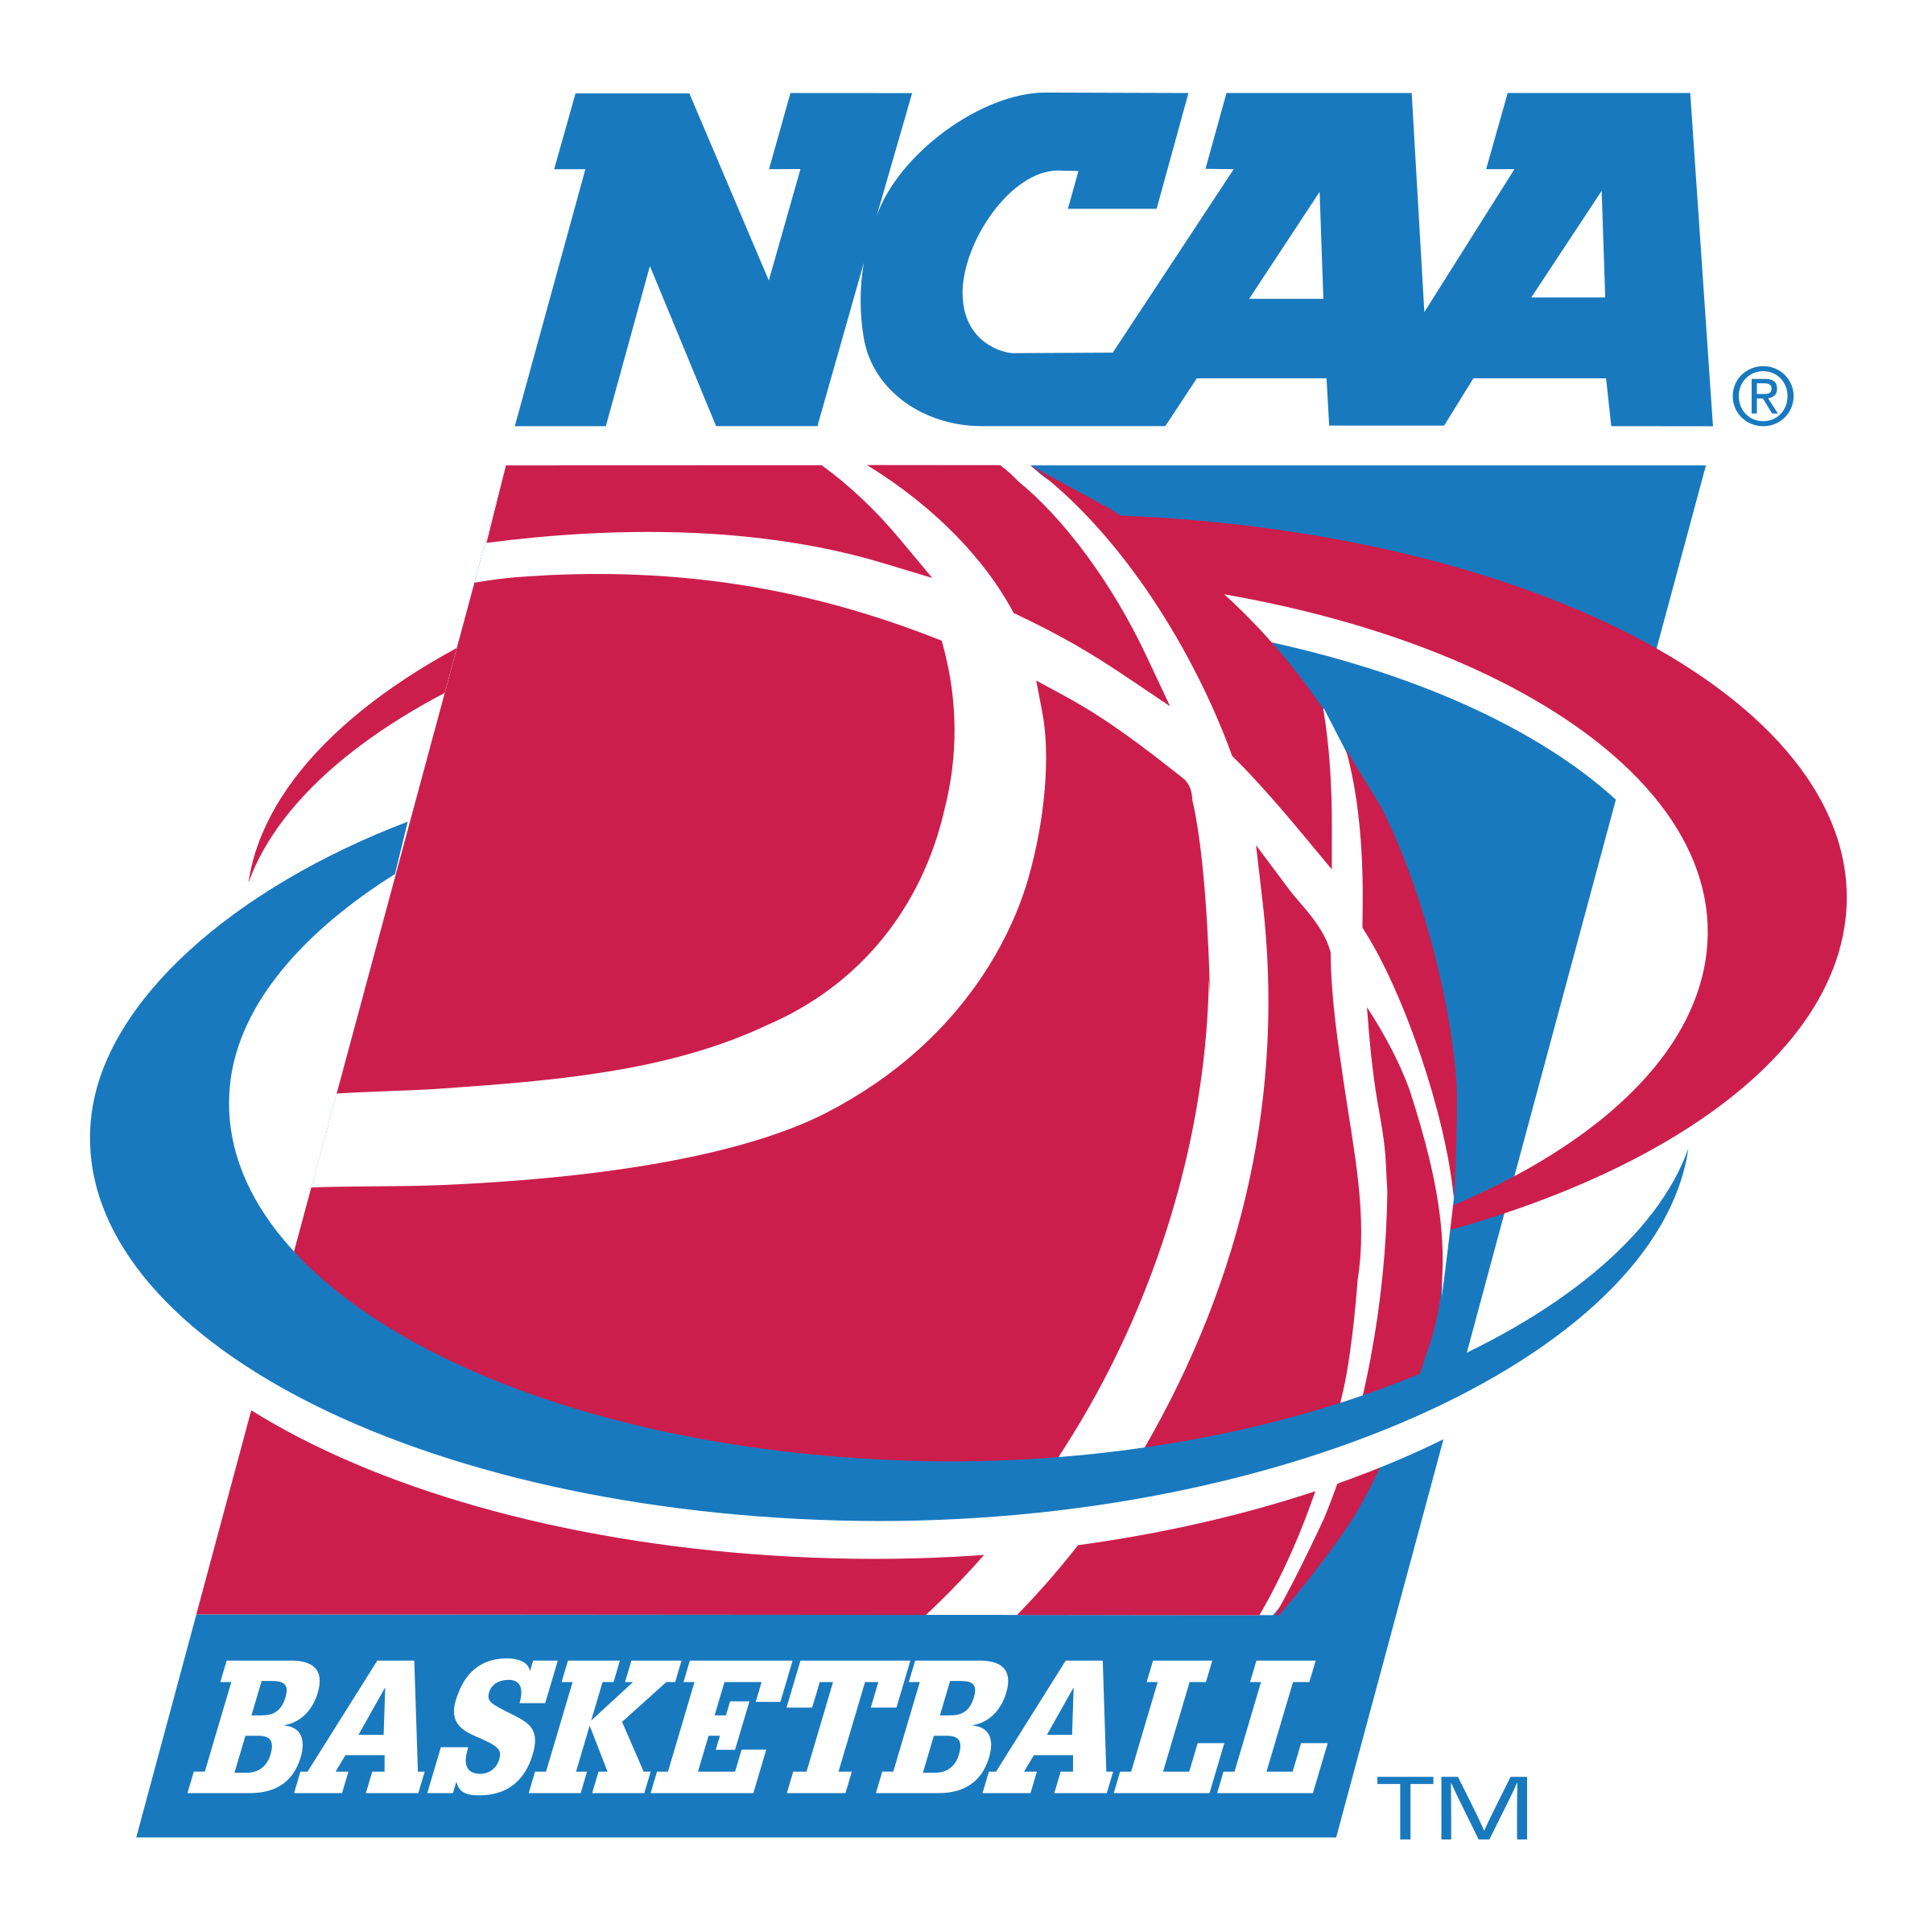 Transparent Basketball Logo - NCAA Basketball Logo PNG Transparent & SVG Vector